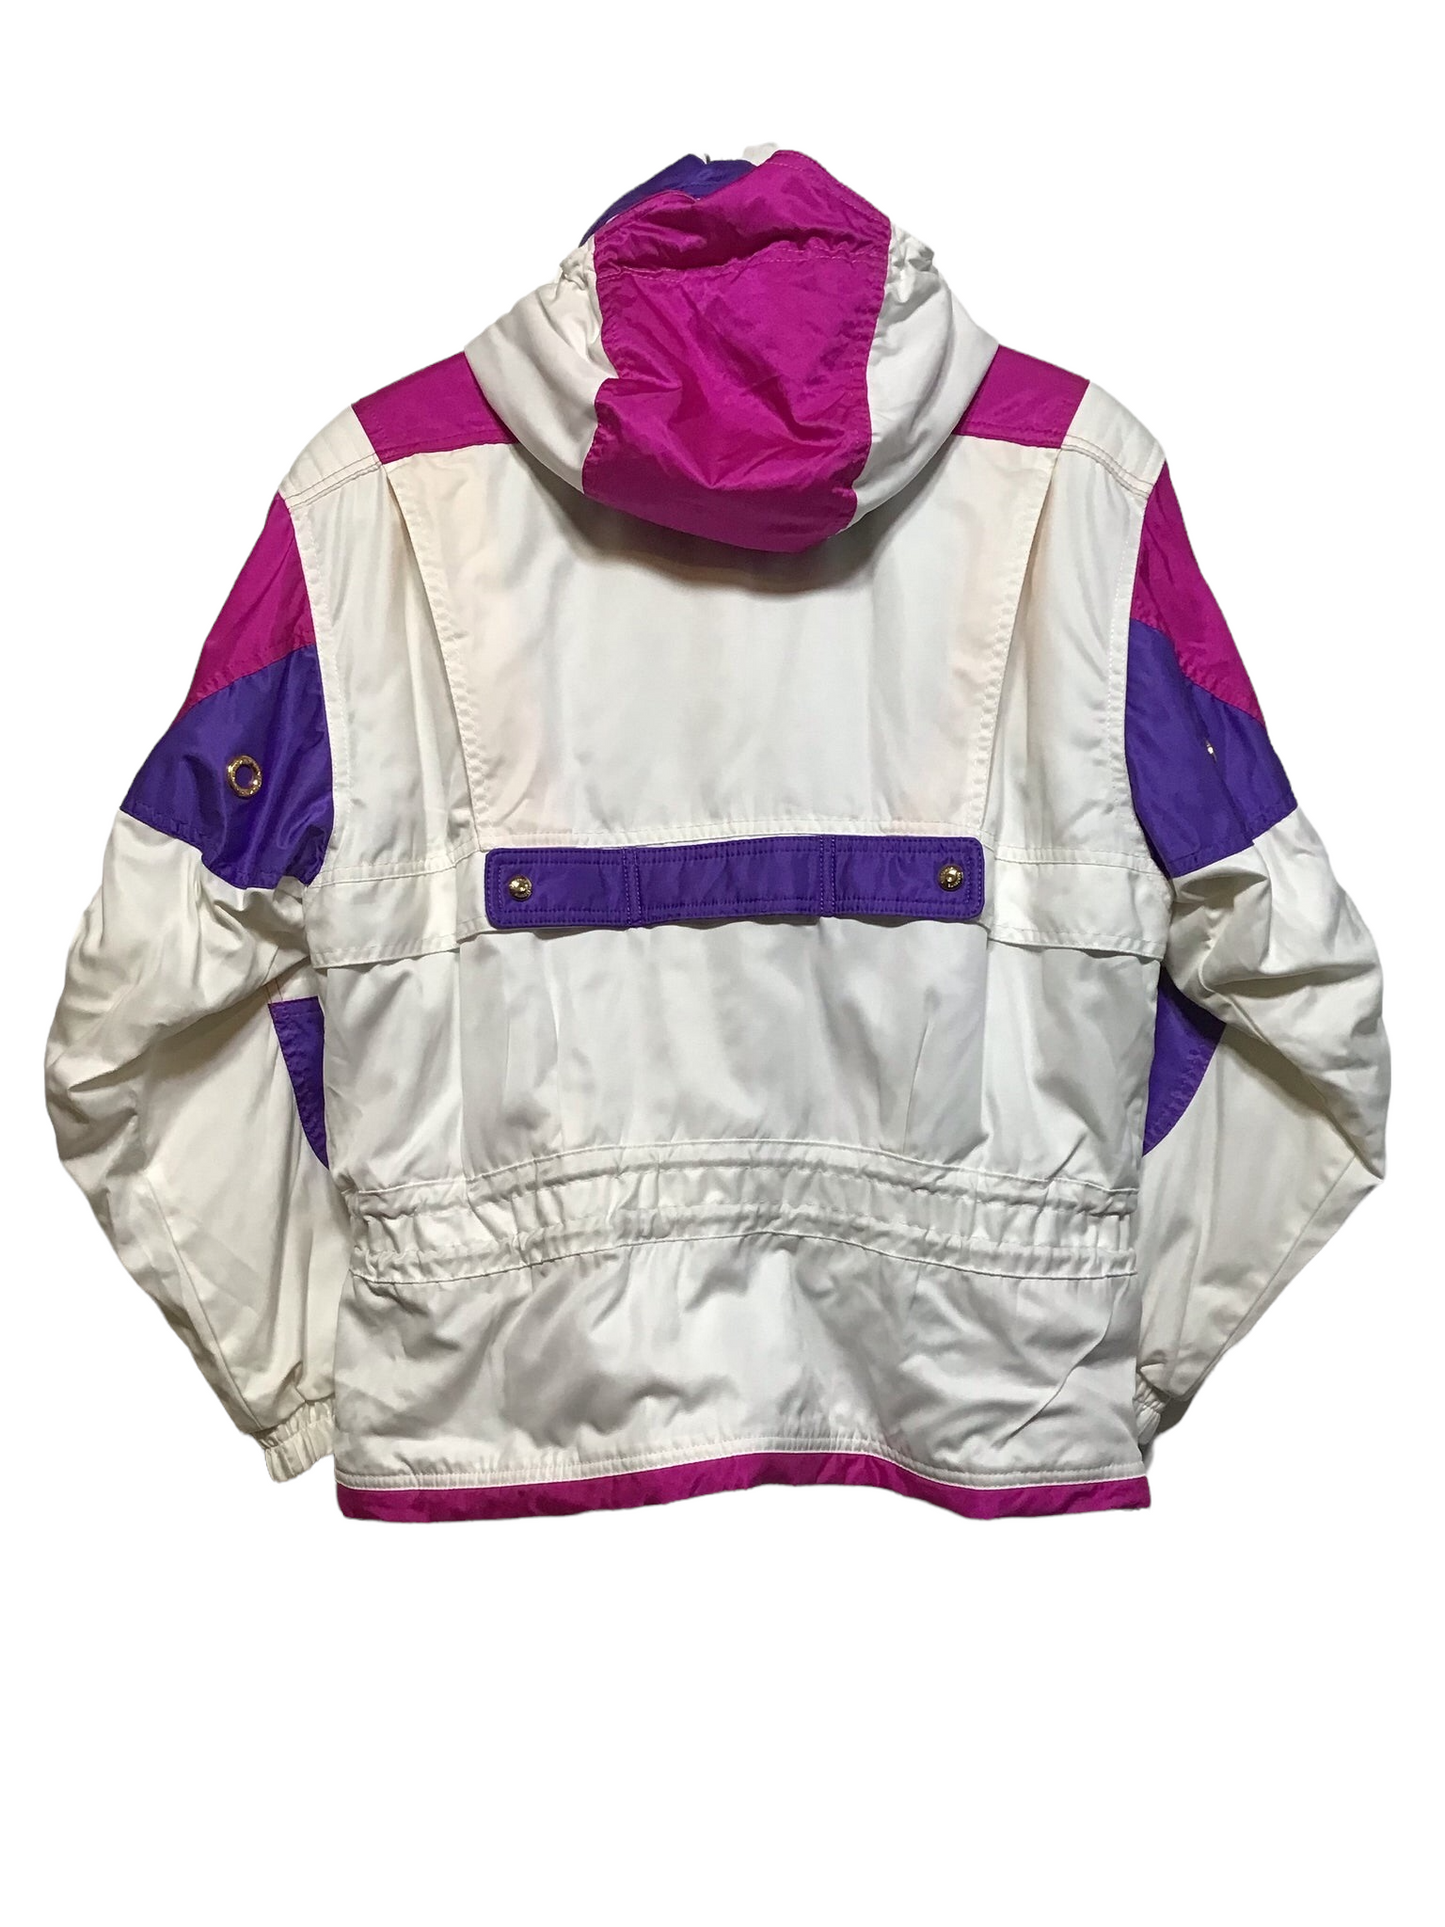 Descente Competition Ski Jacket (Size M)